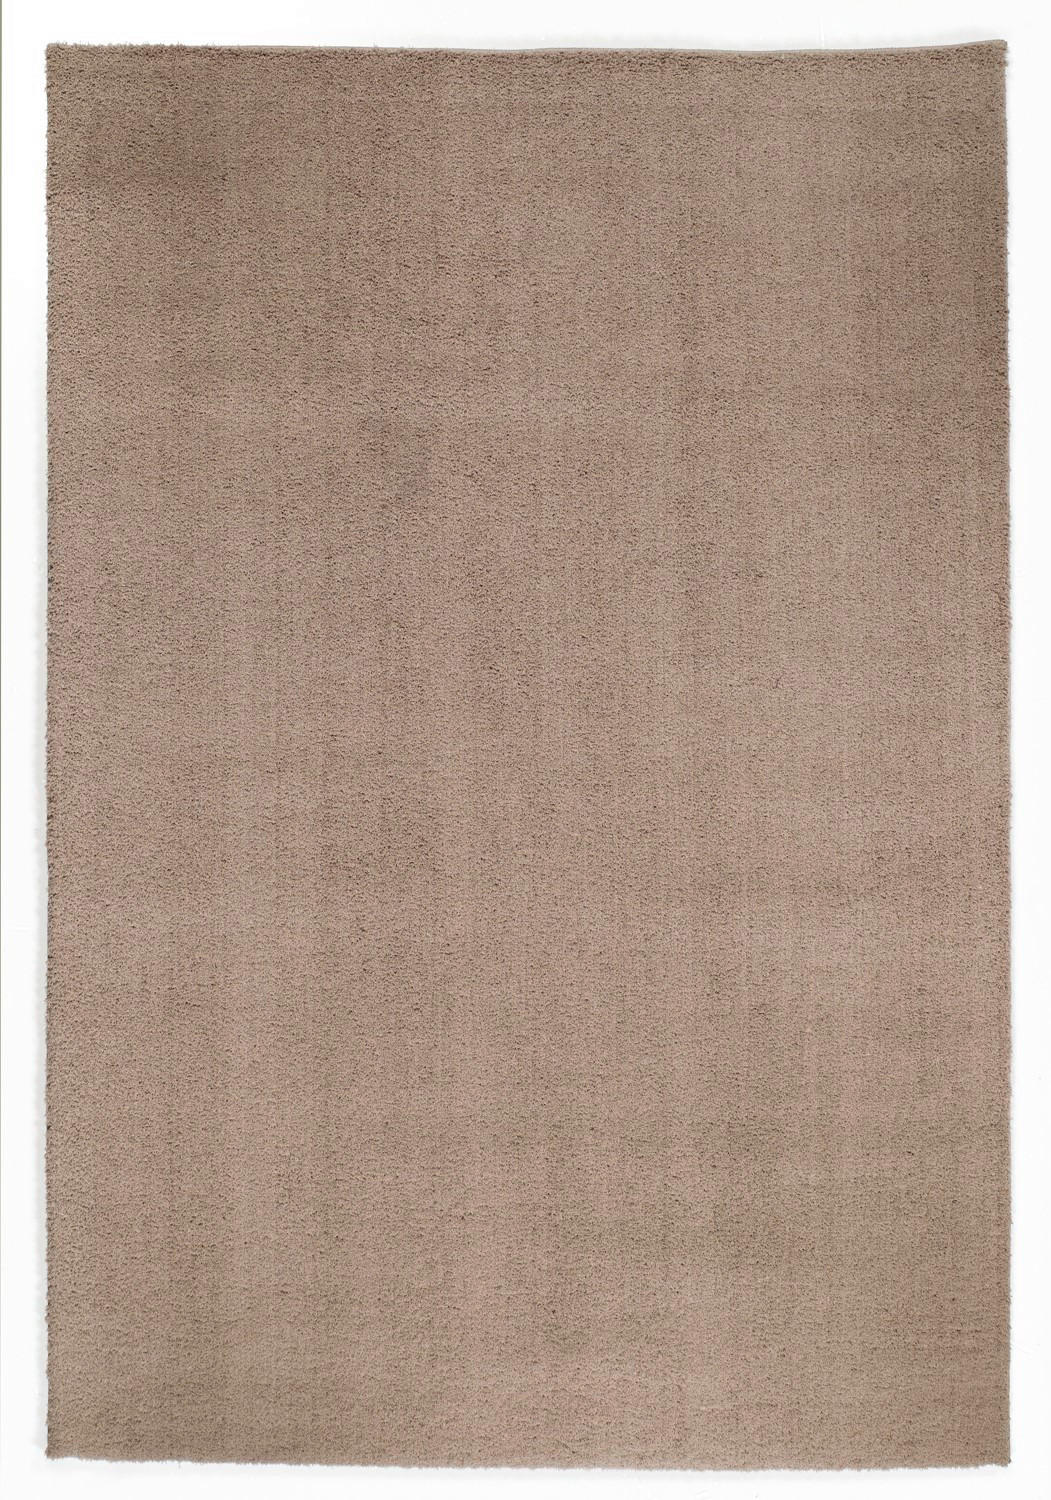 WEBTEPPICH  65/130 cm  Beige   - Beige, Basics, Textil (65/130cm) - Novel